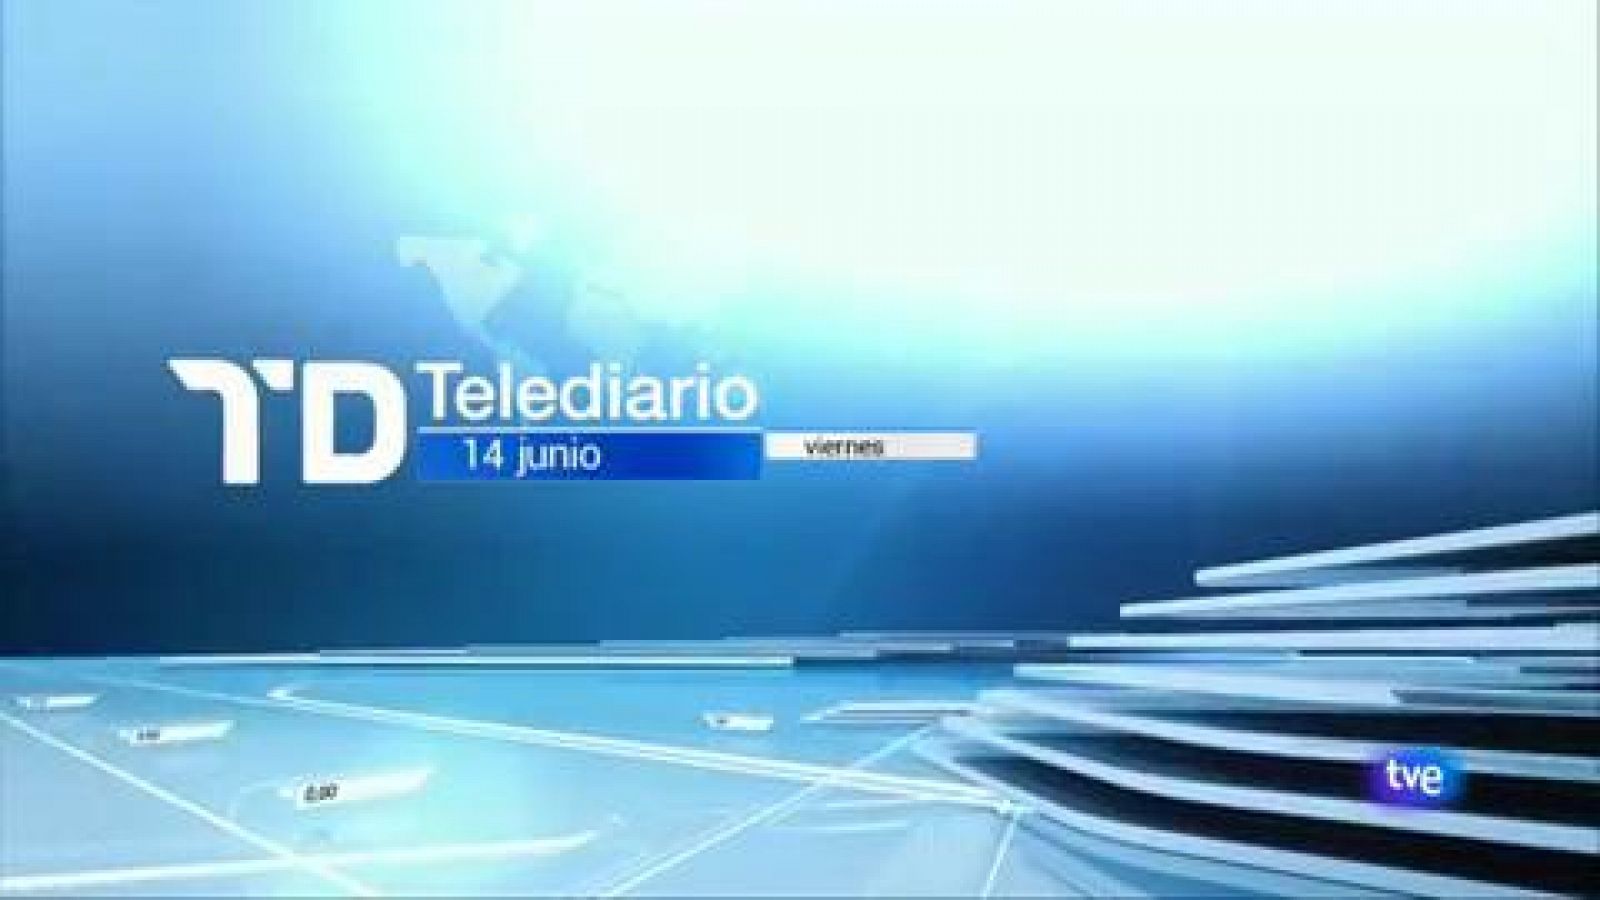 Telediario 1: Telediario 1 en 4' - 14/06/19 | RTVE Play